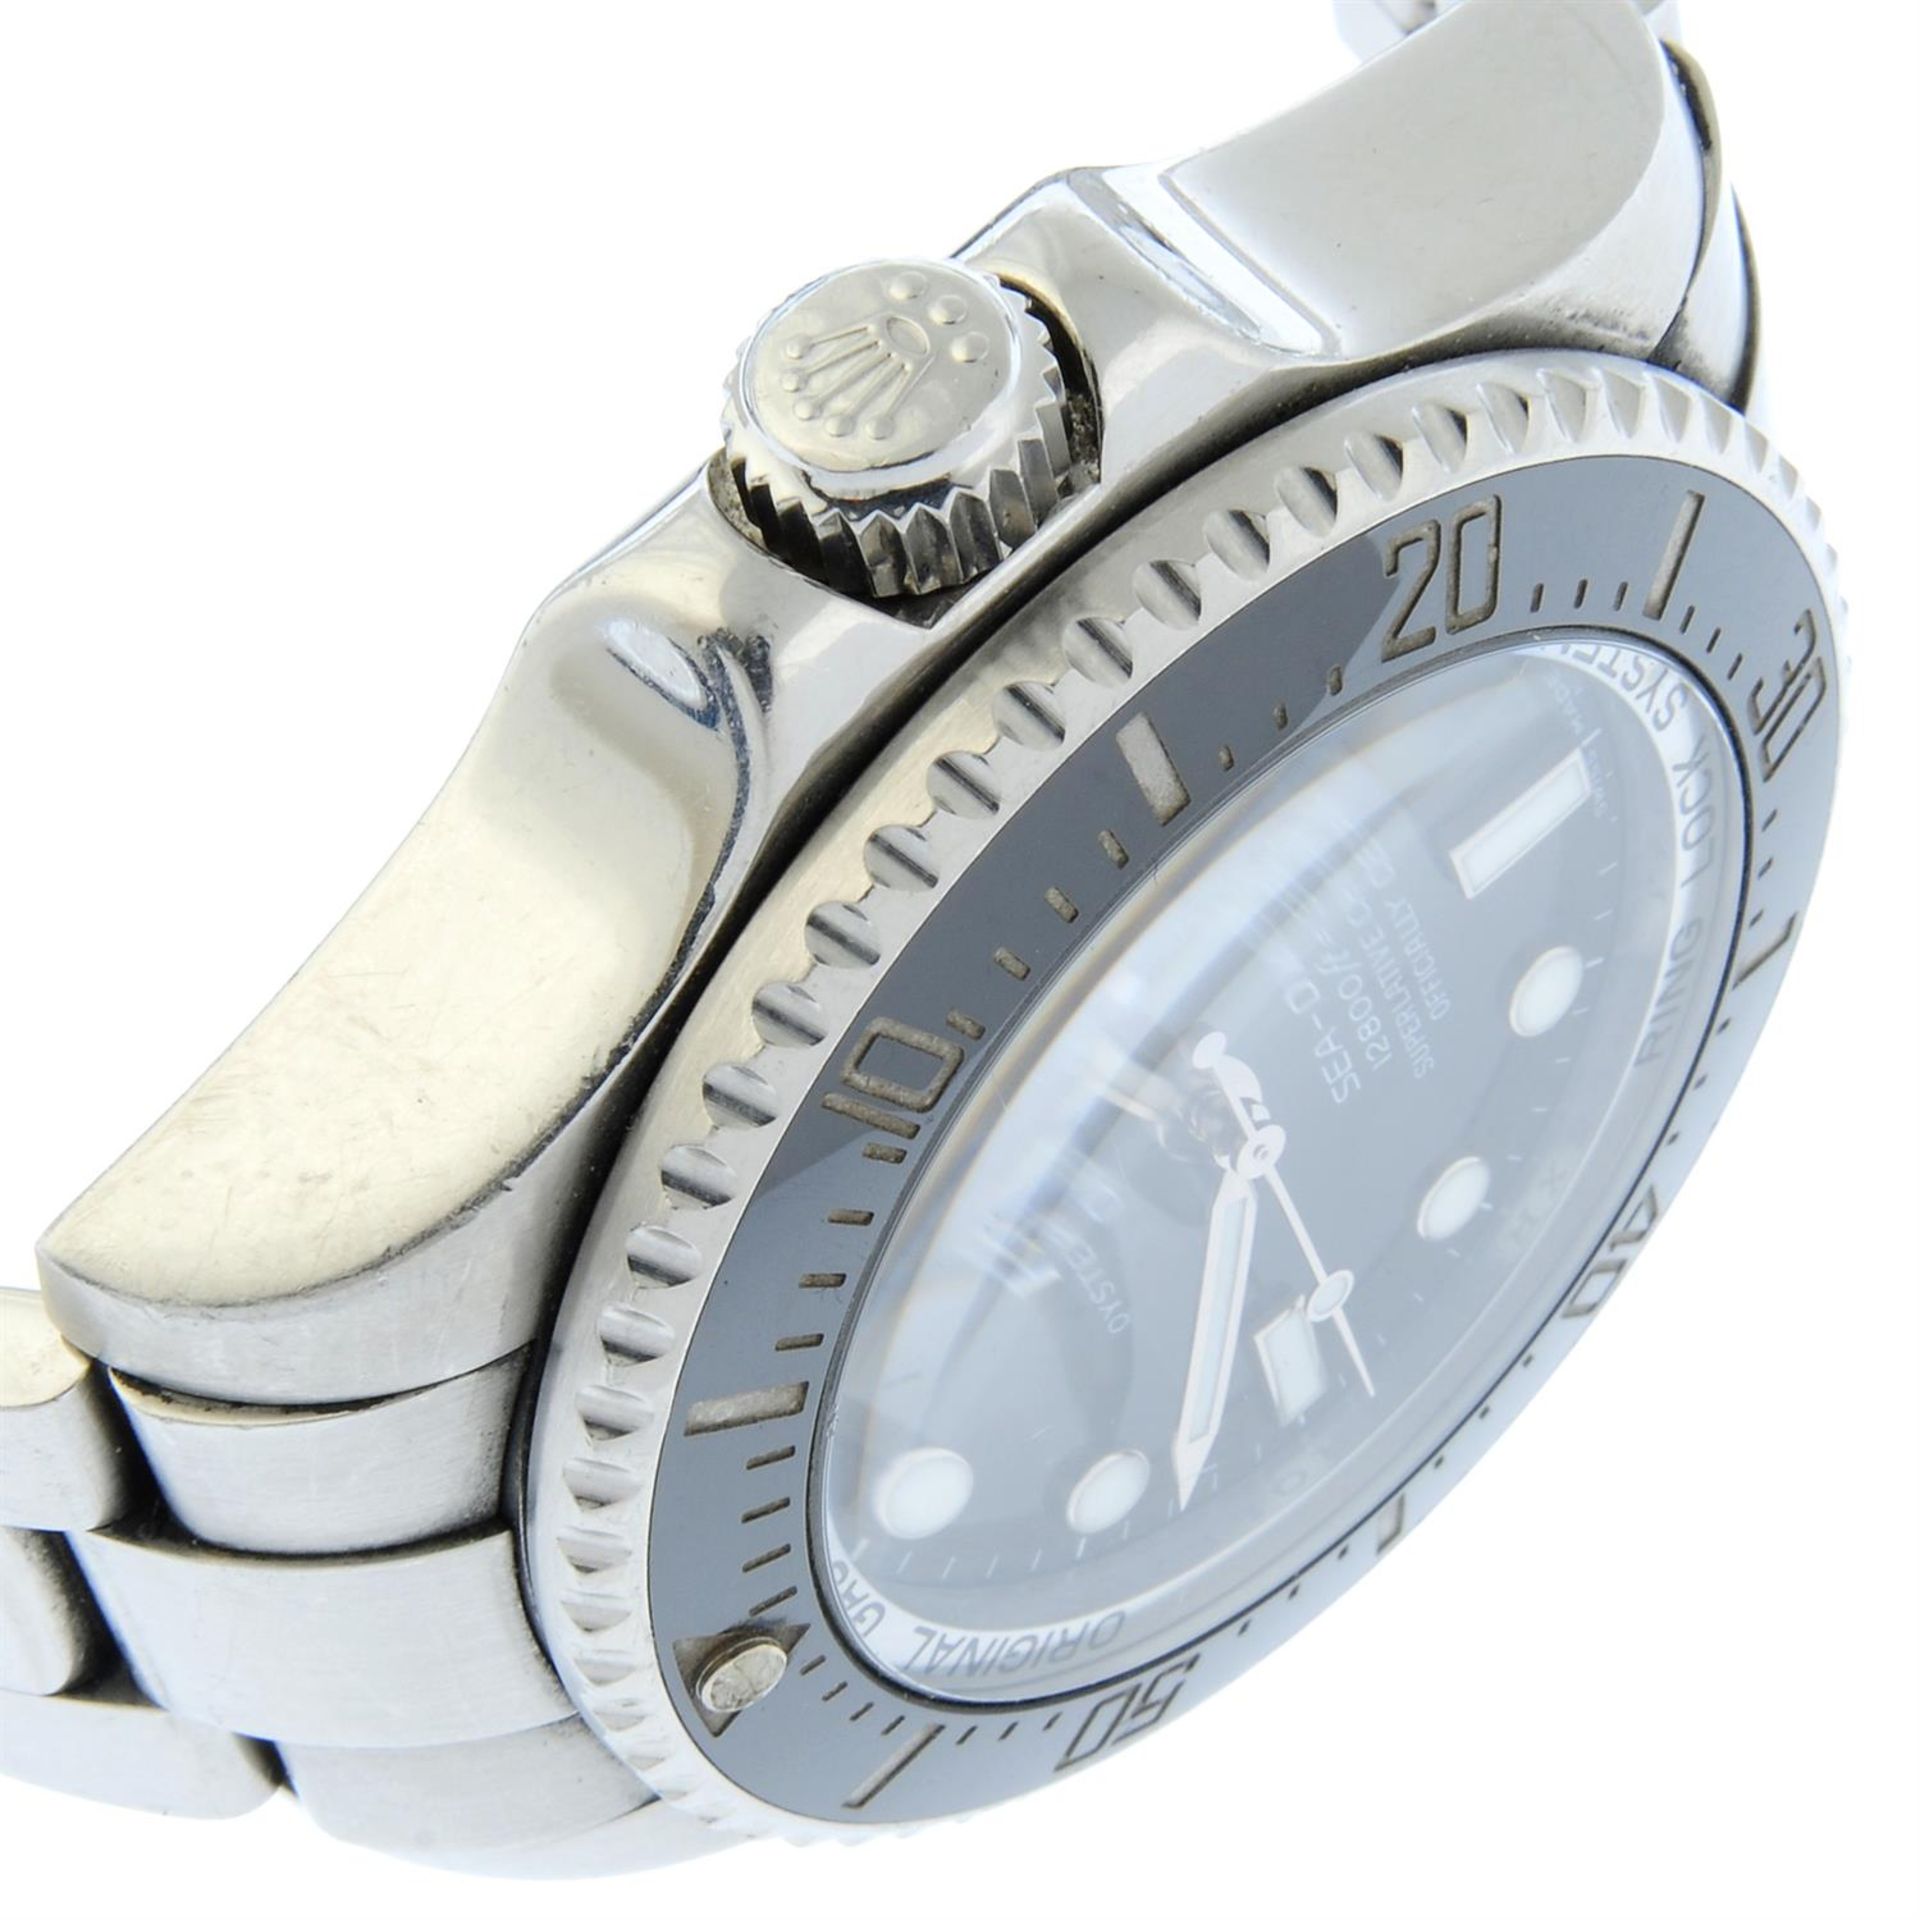 Rolex - an Oyster Perpetual Deepsea Sea-Dweller watch, 44mm. - Image 3 of 4